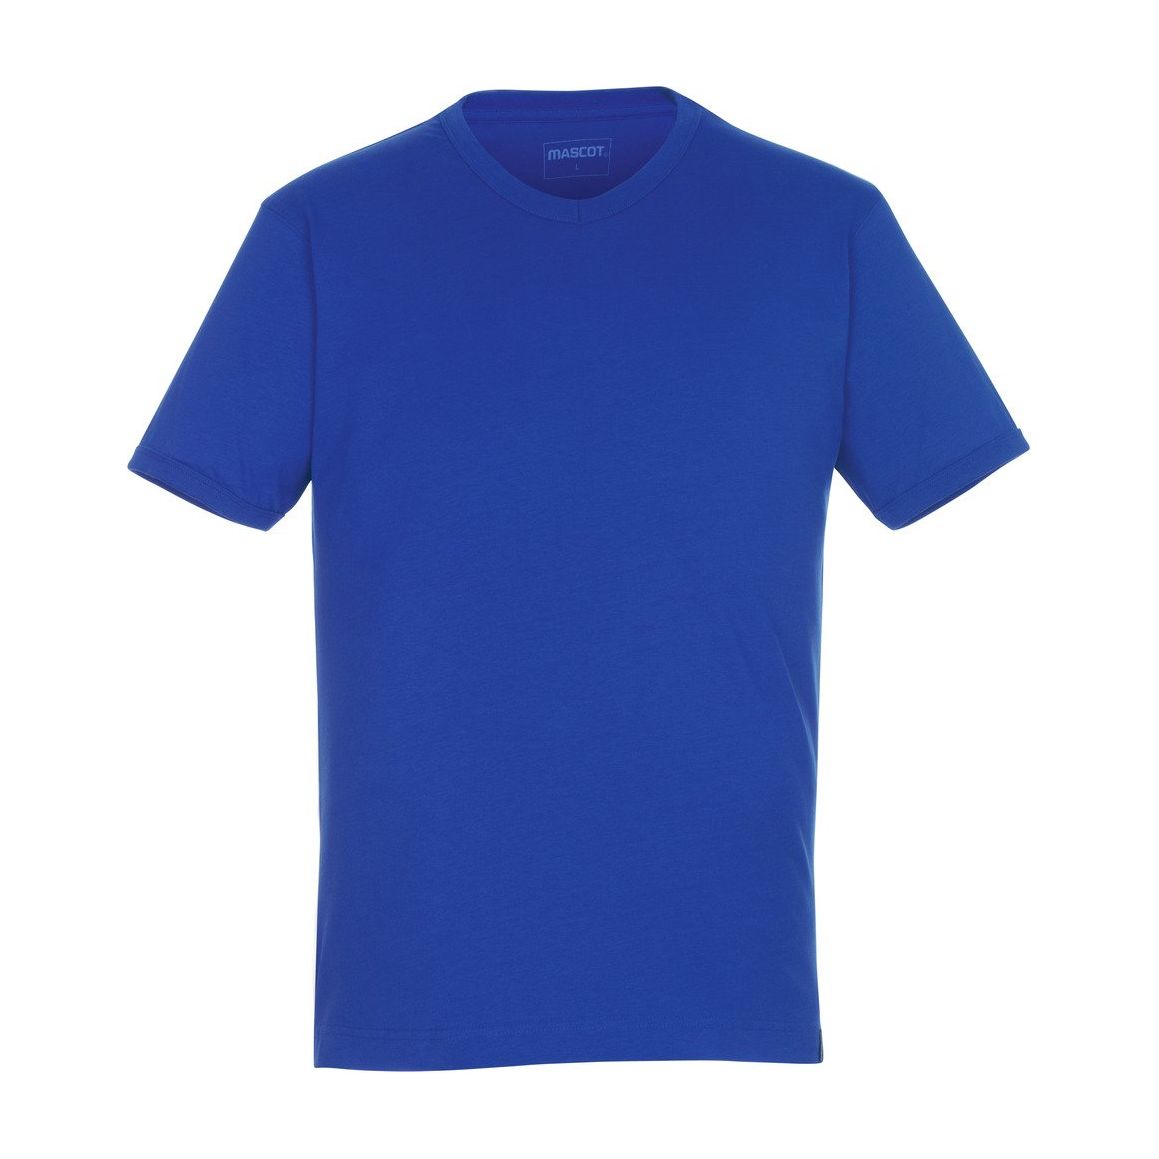 Mascot Algoso T-shirt V-Neck Royal Blue 50415-250-11 Front